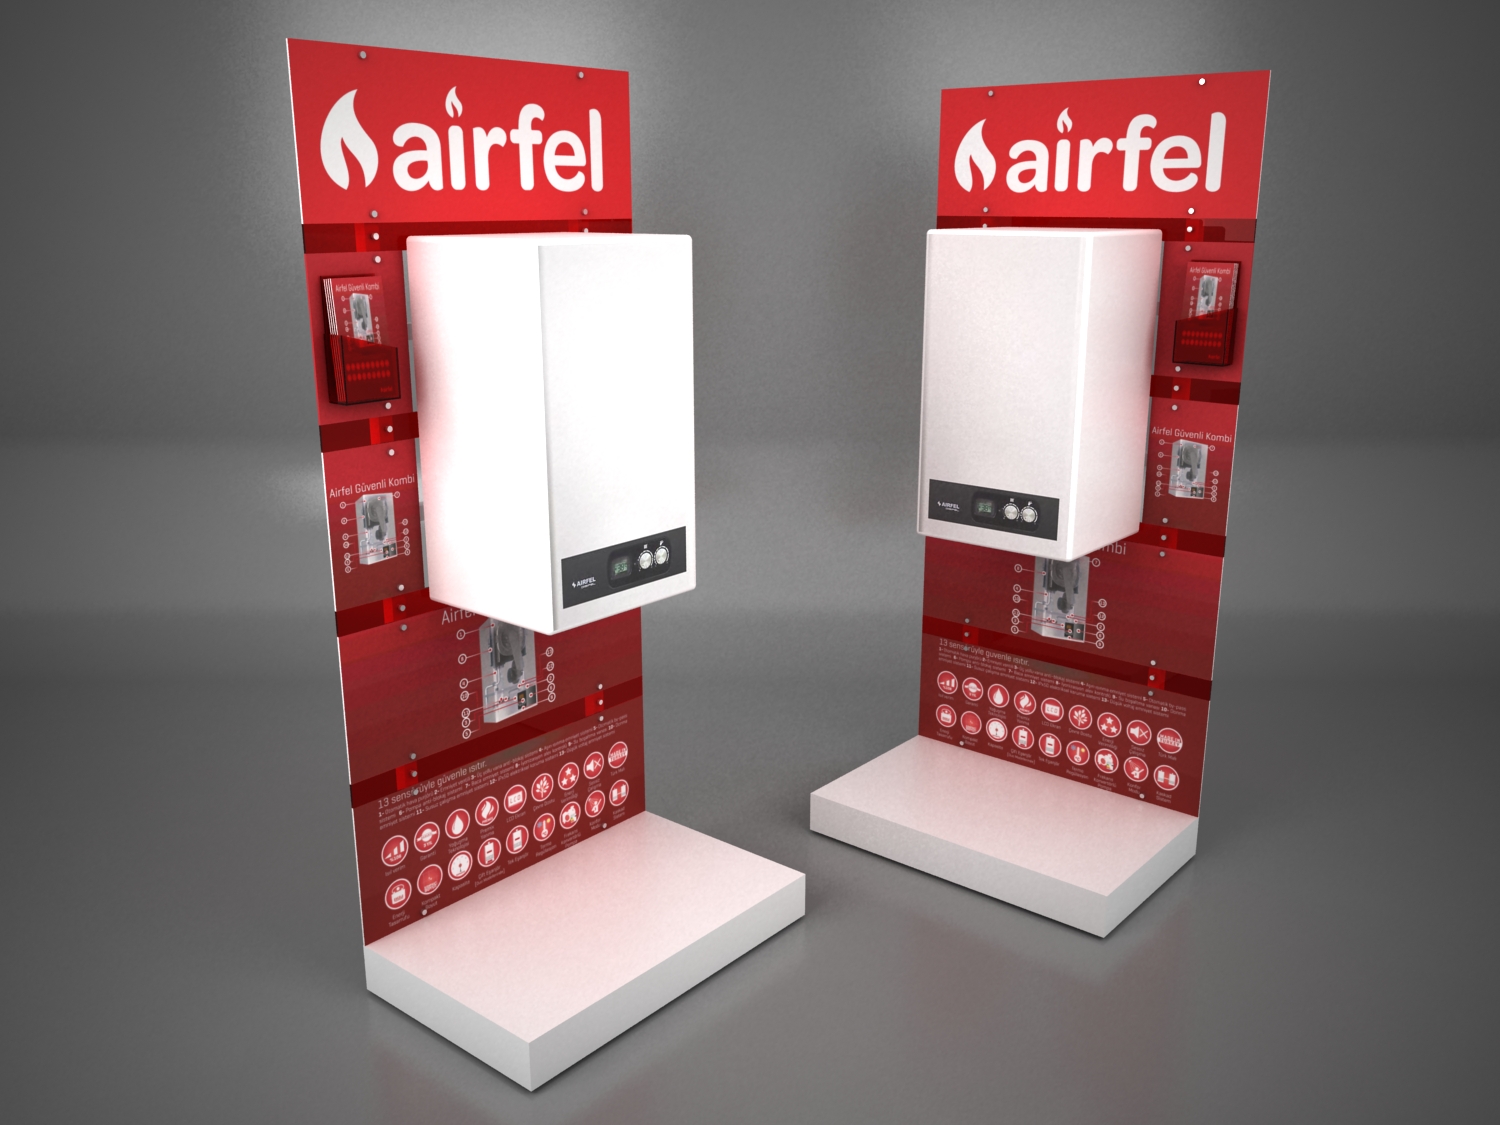 Airfel In-Store Application